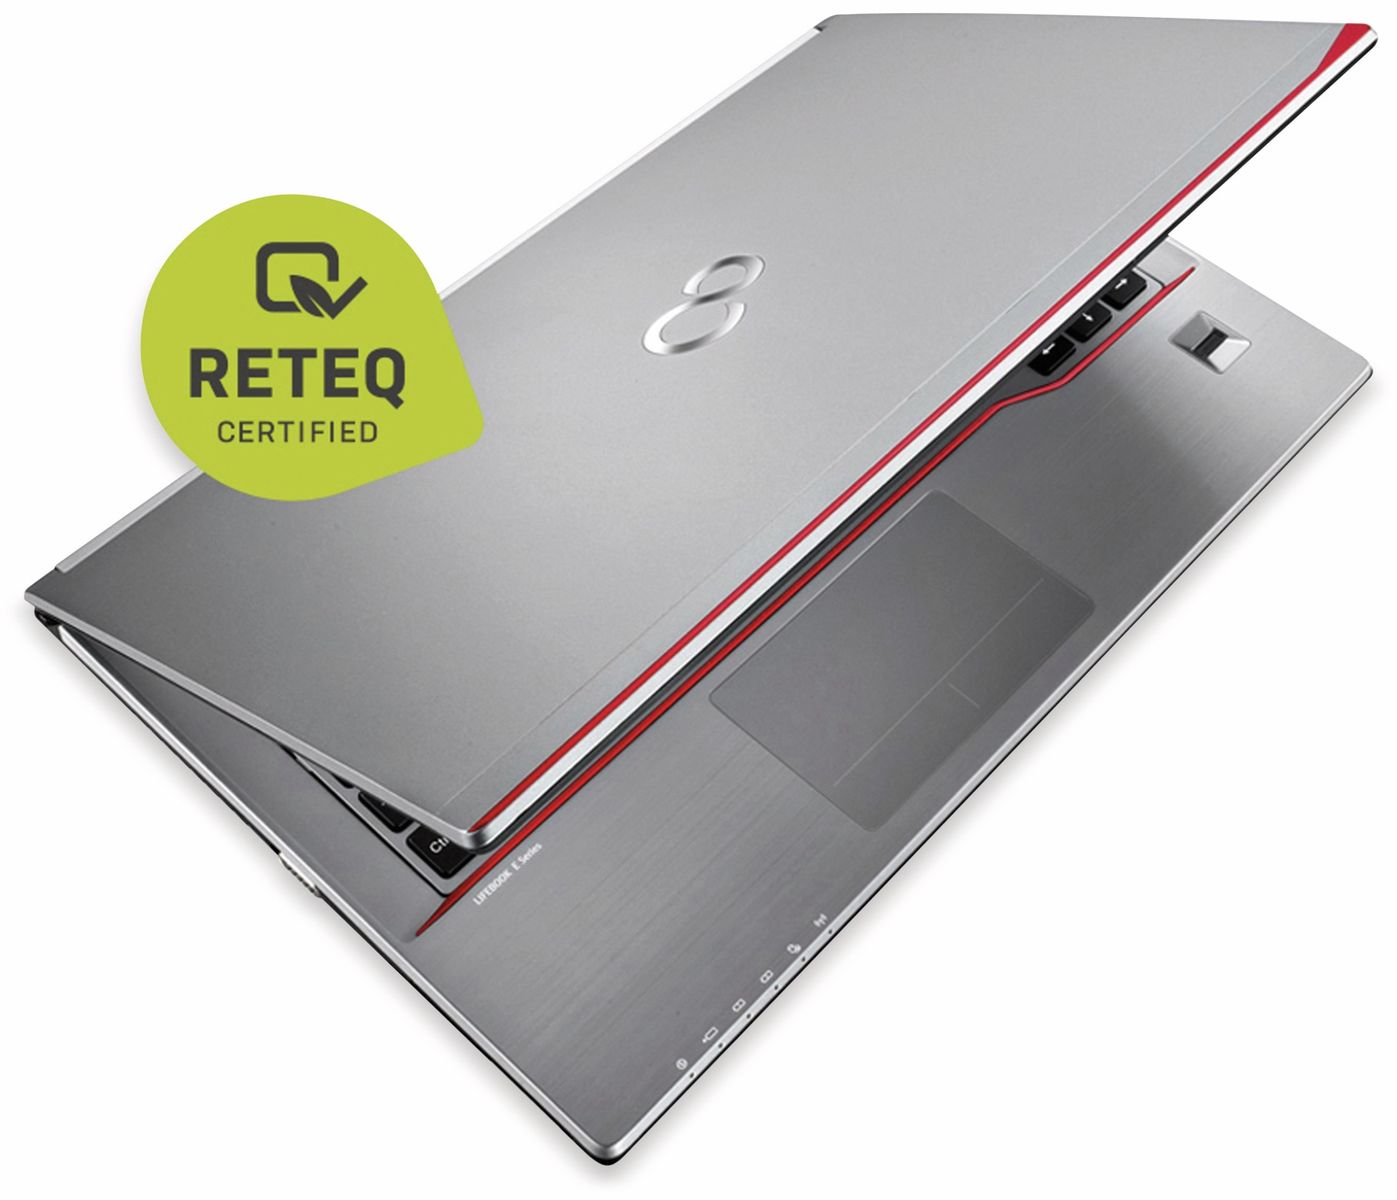 FUJITSU Notebook Lifebook E736, 13,3", Intel i5, 8GB RAM, Win10P, Refurbished von Fujitsu